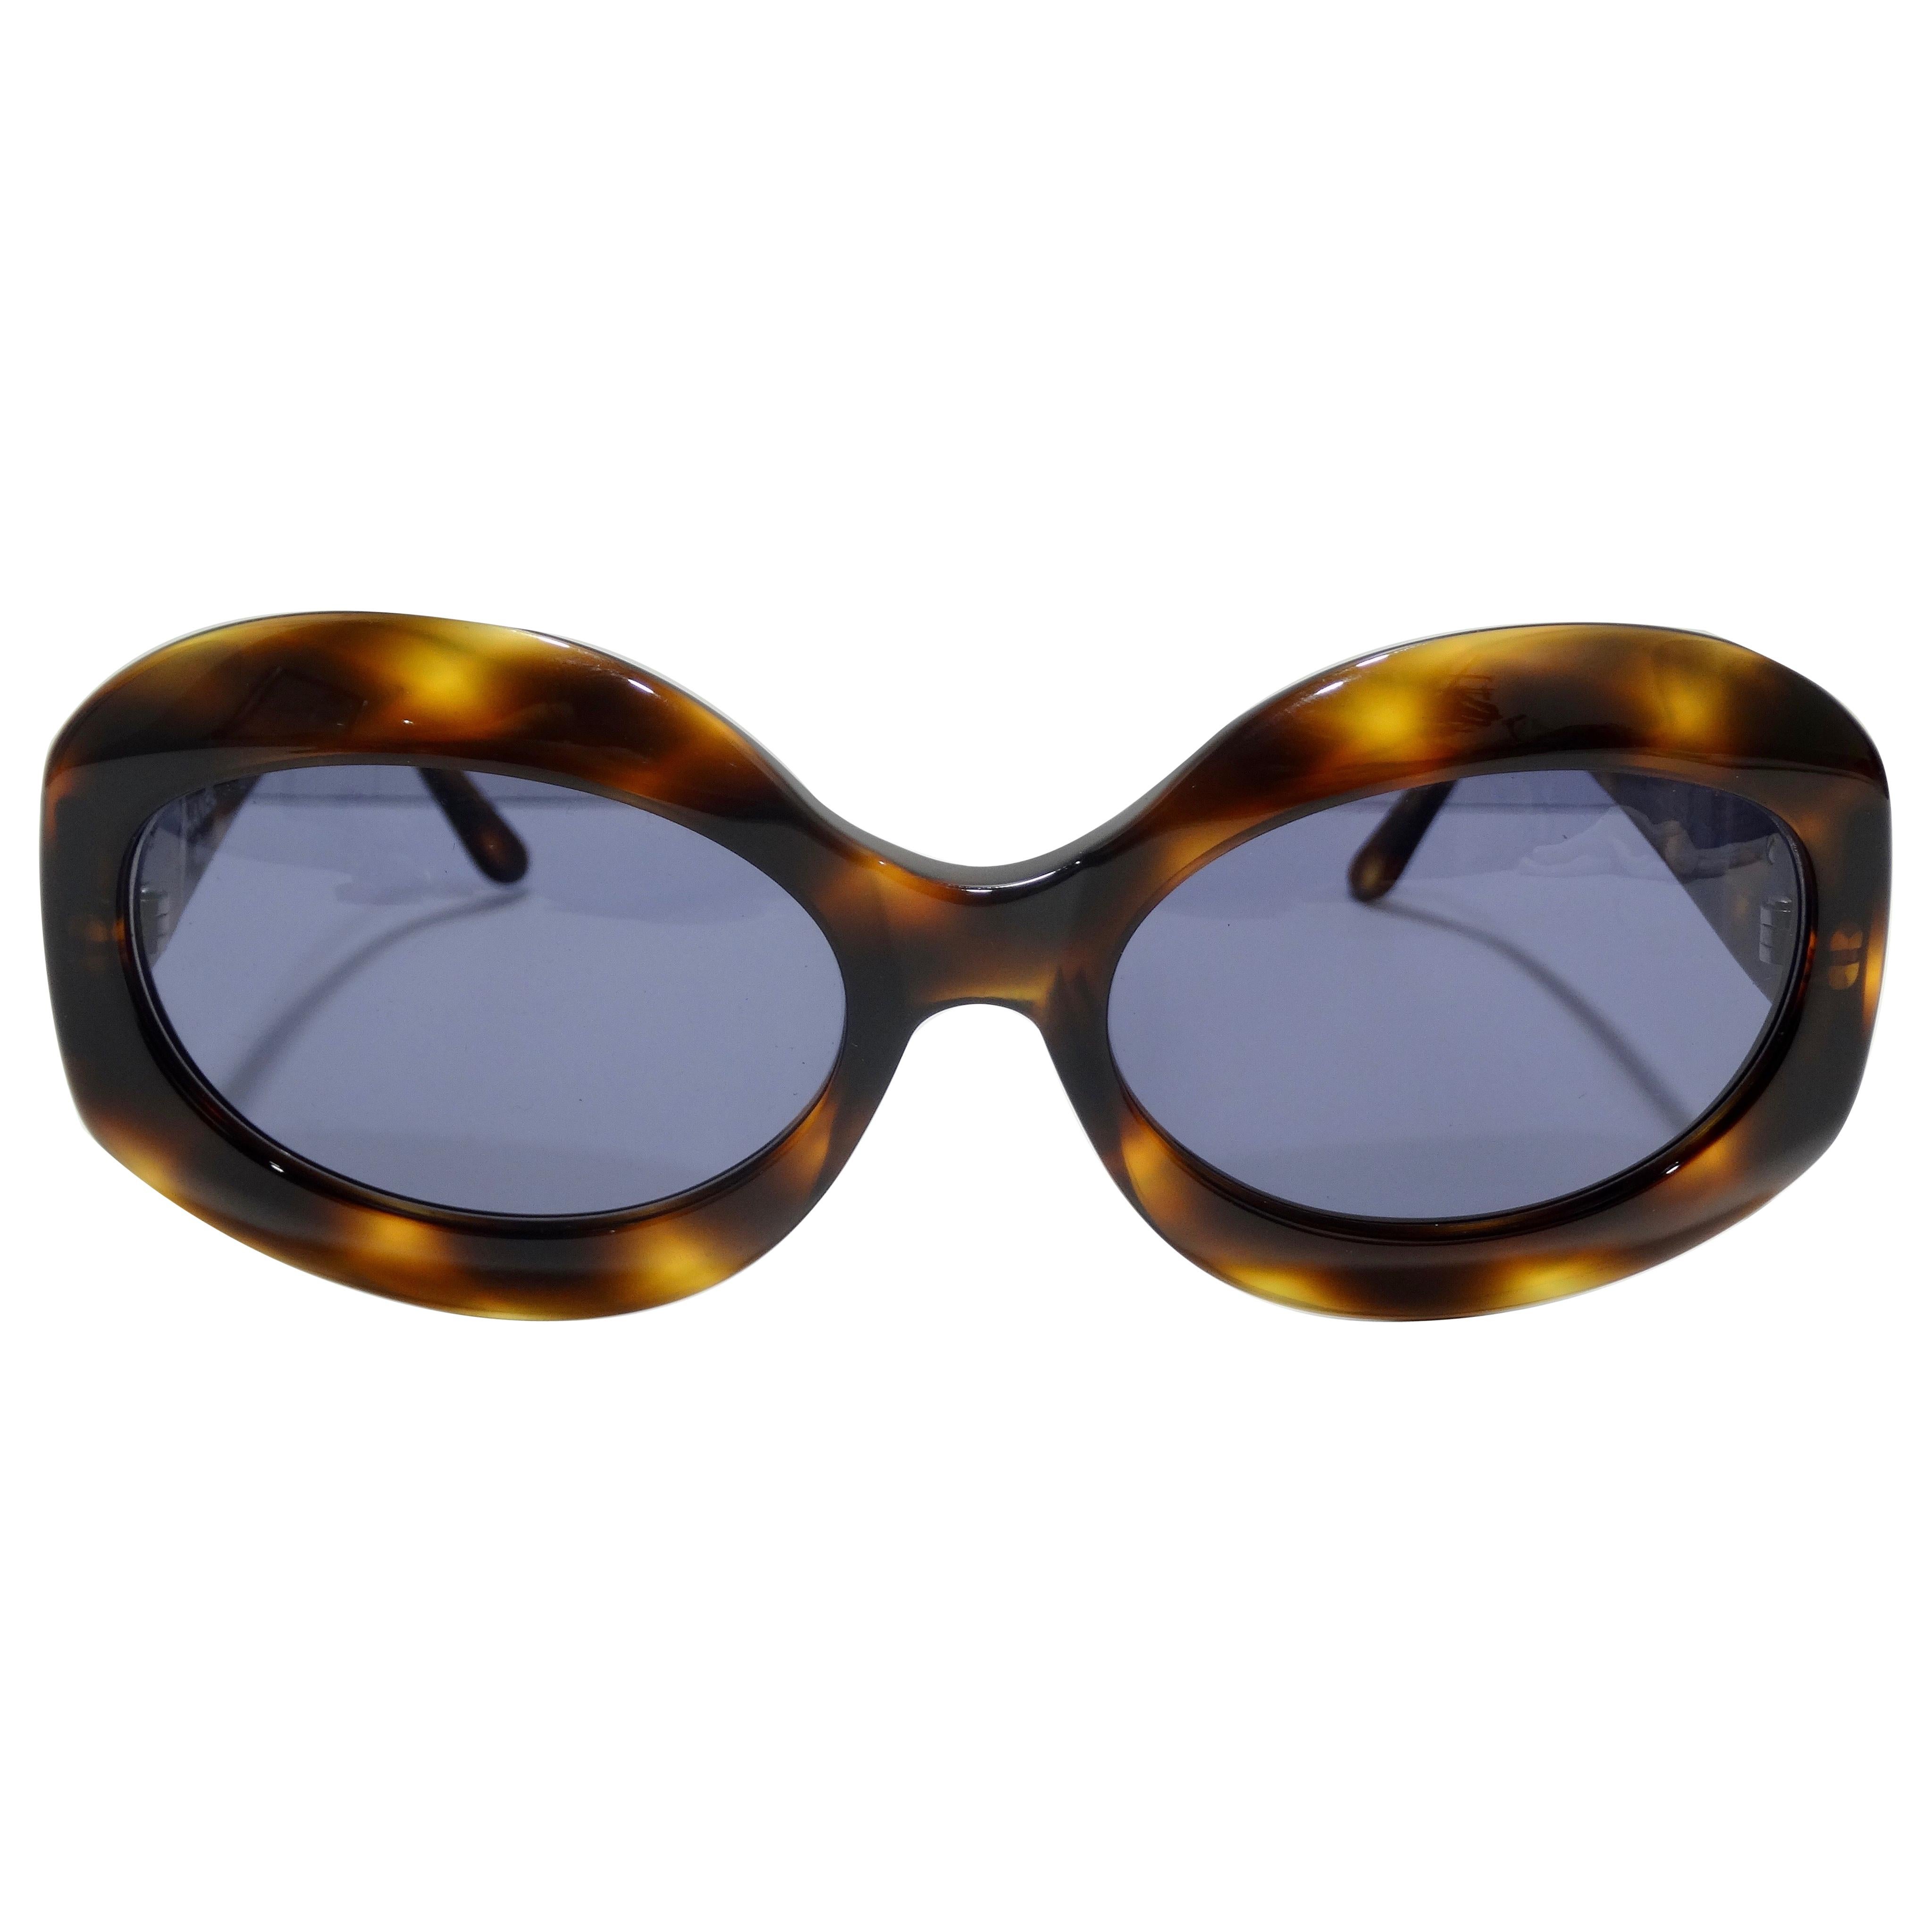 Chanel Vintage Tortoise Shell Sunglasses